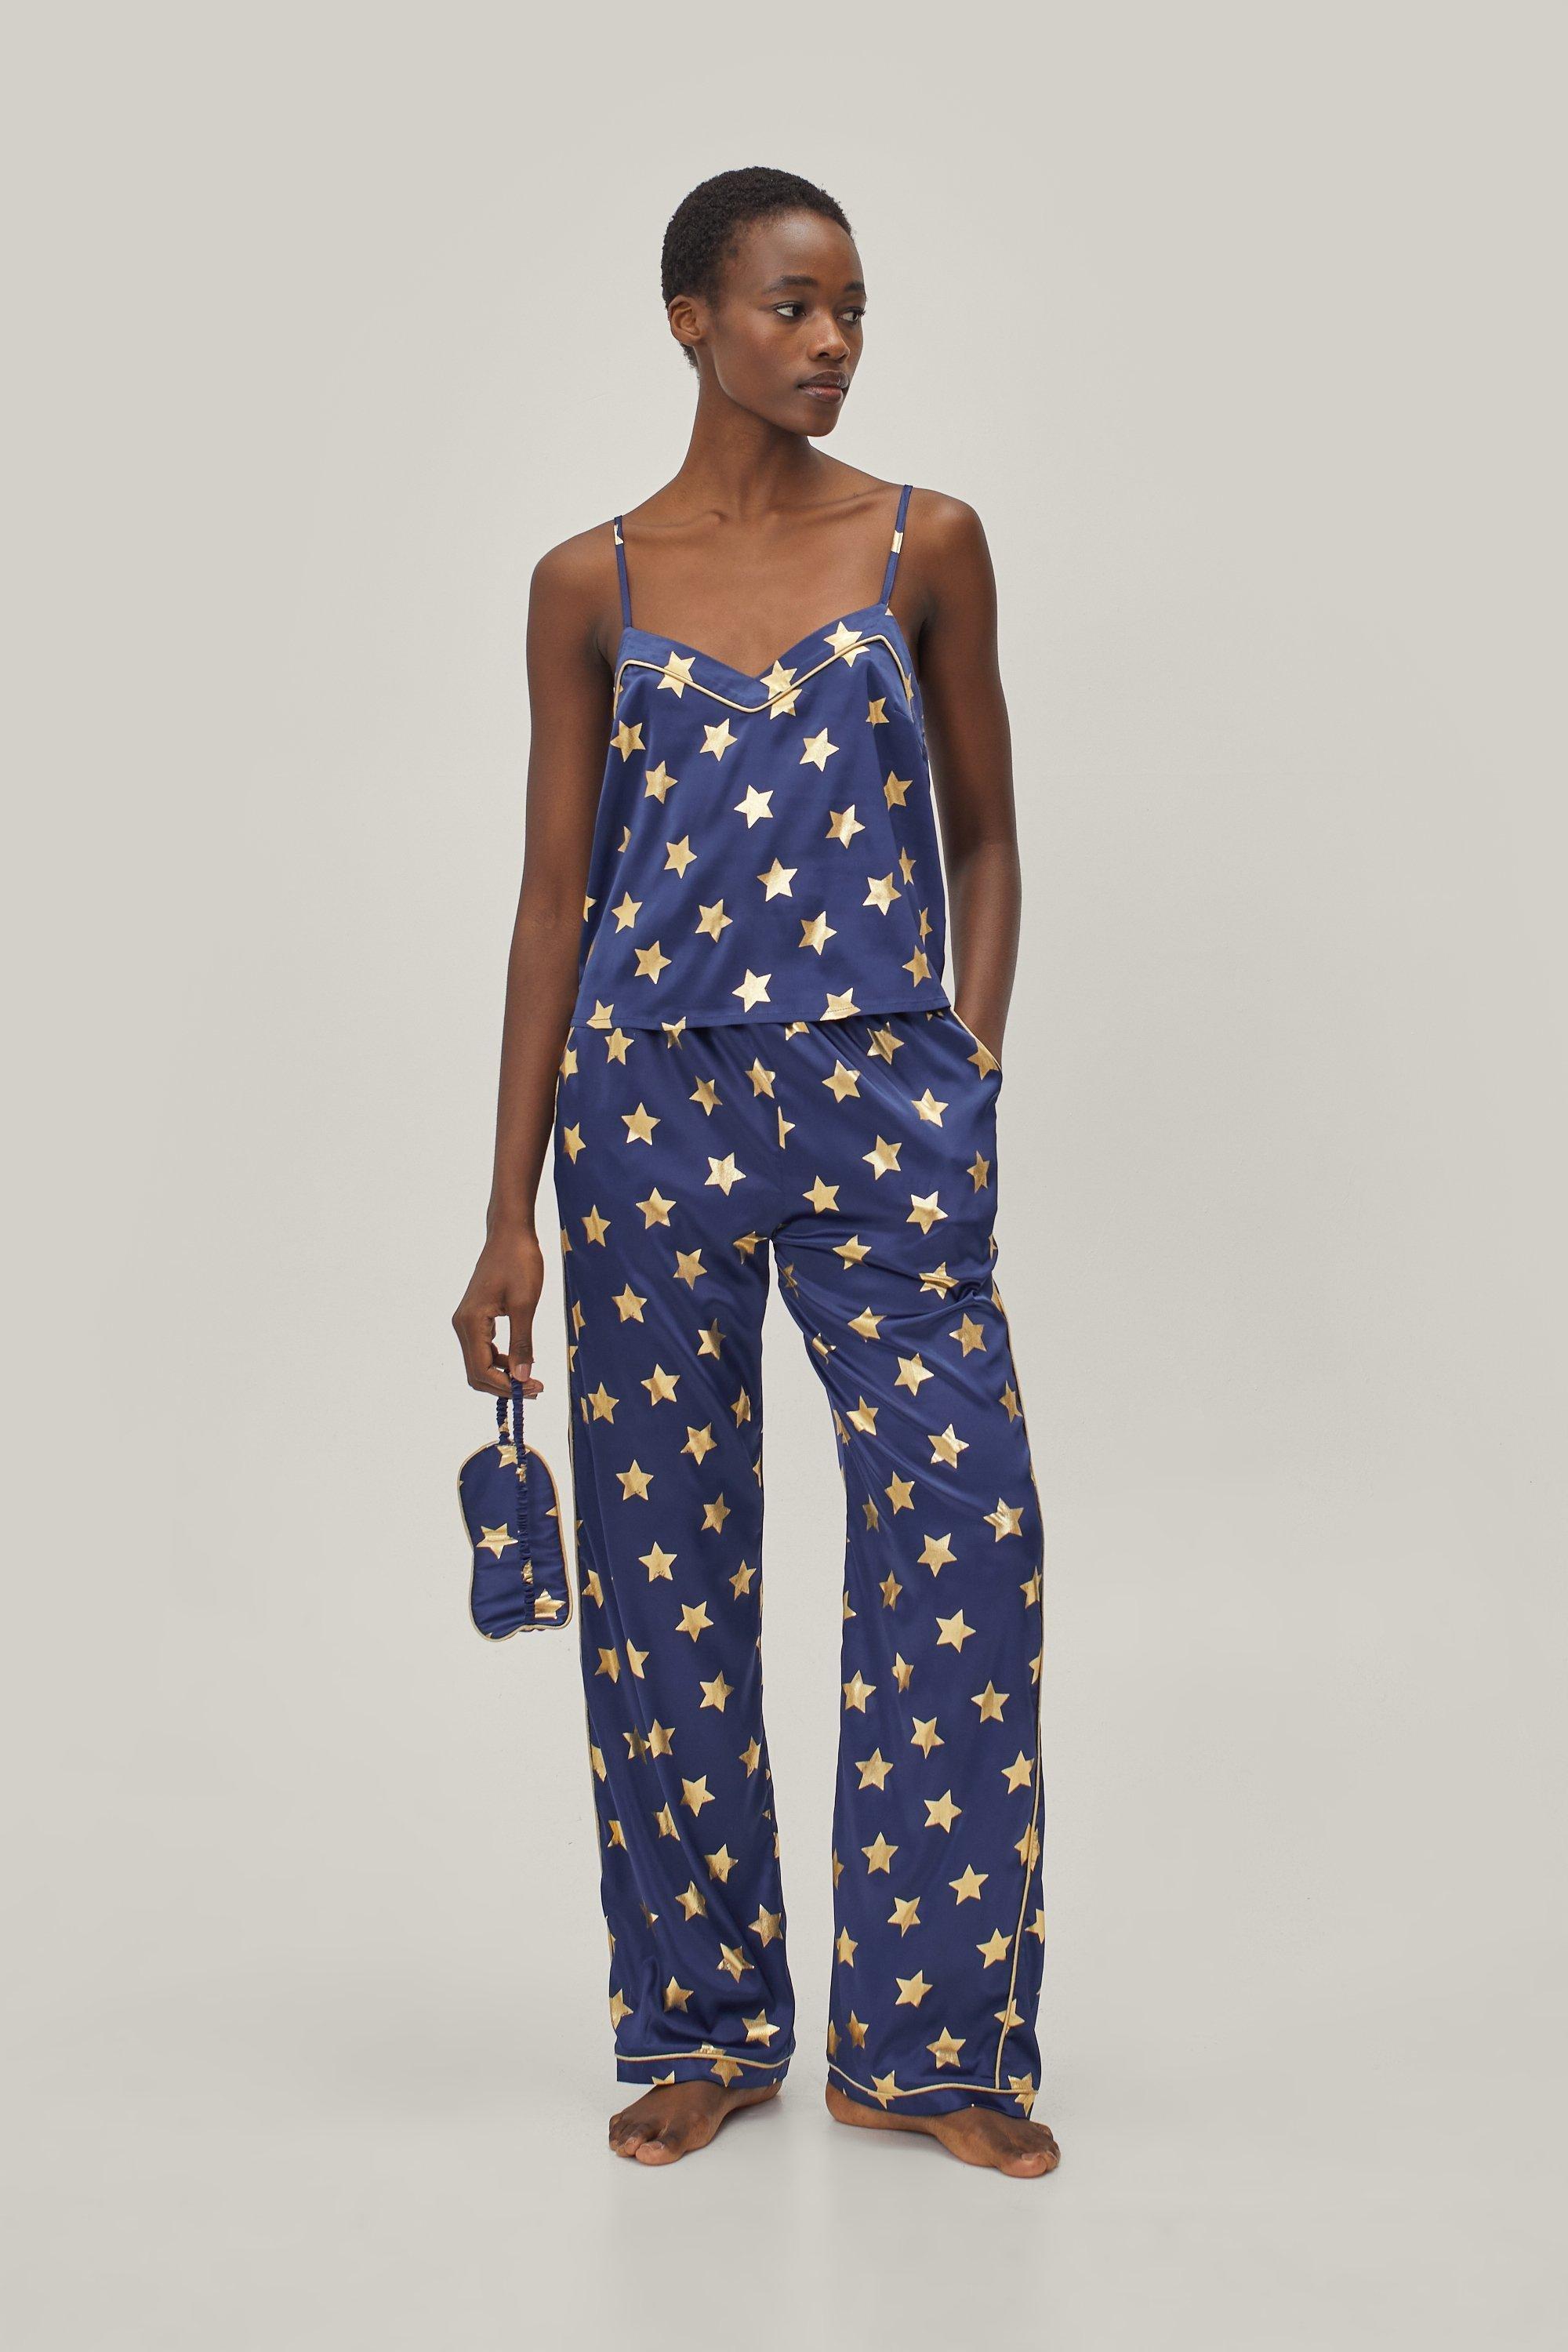 Women's Foil Star Satin 3 Piece Pajama Set